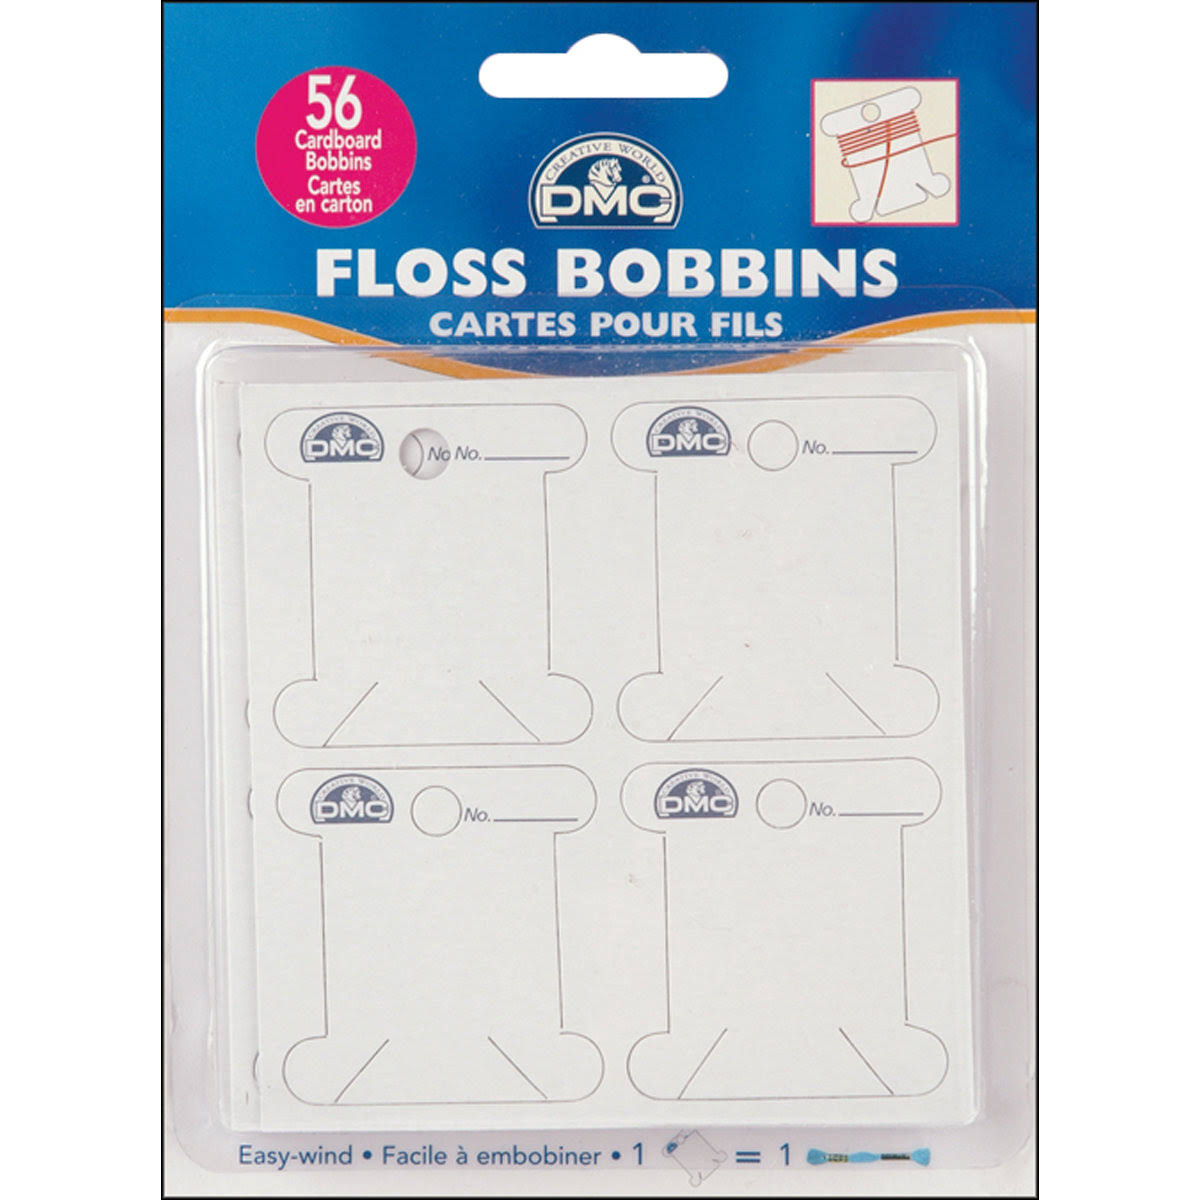 DMC Floss Bobbins Cardboard - White, 56ct